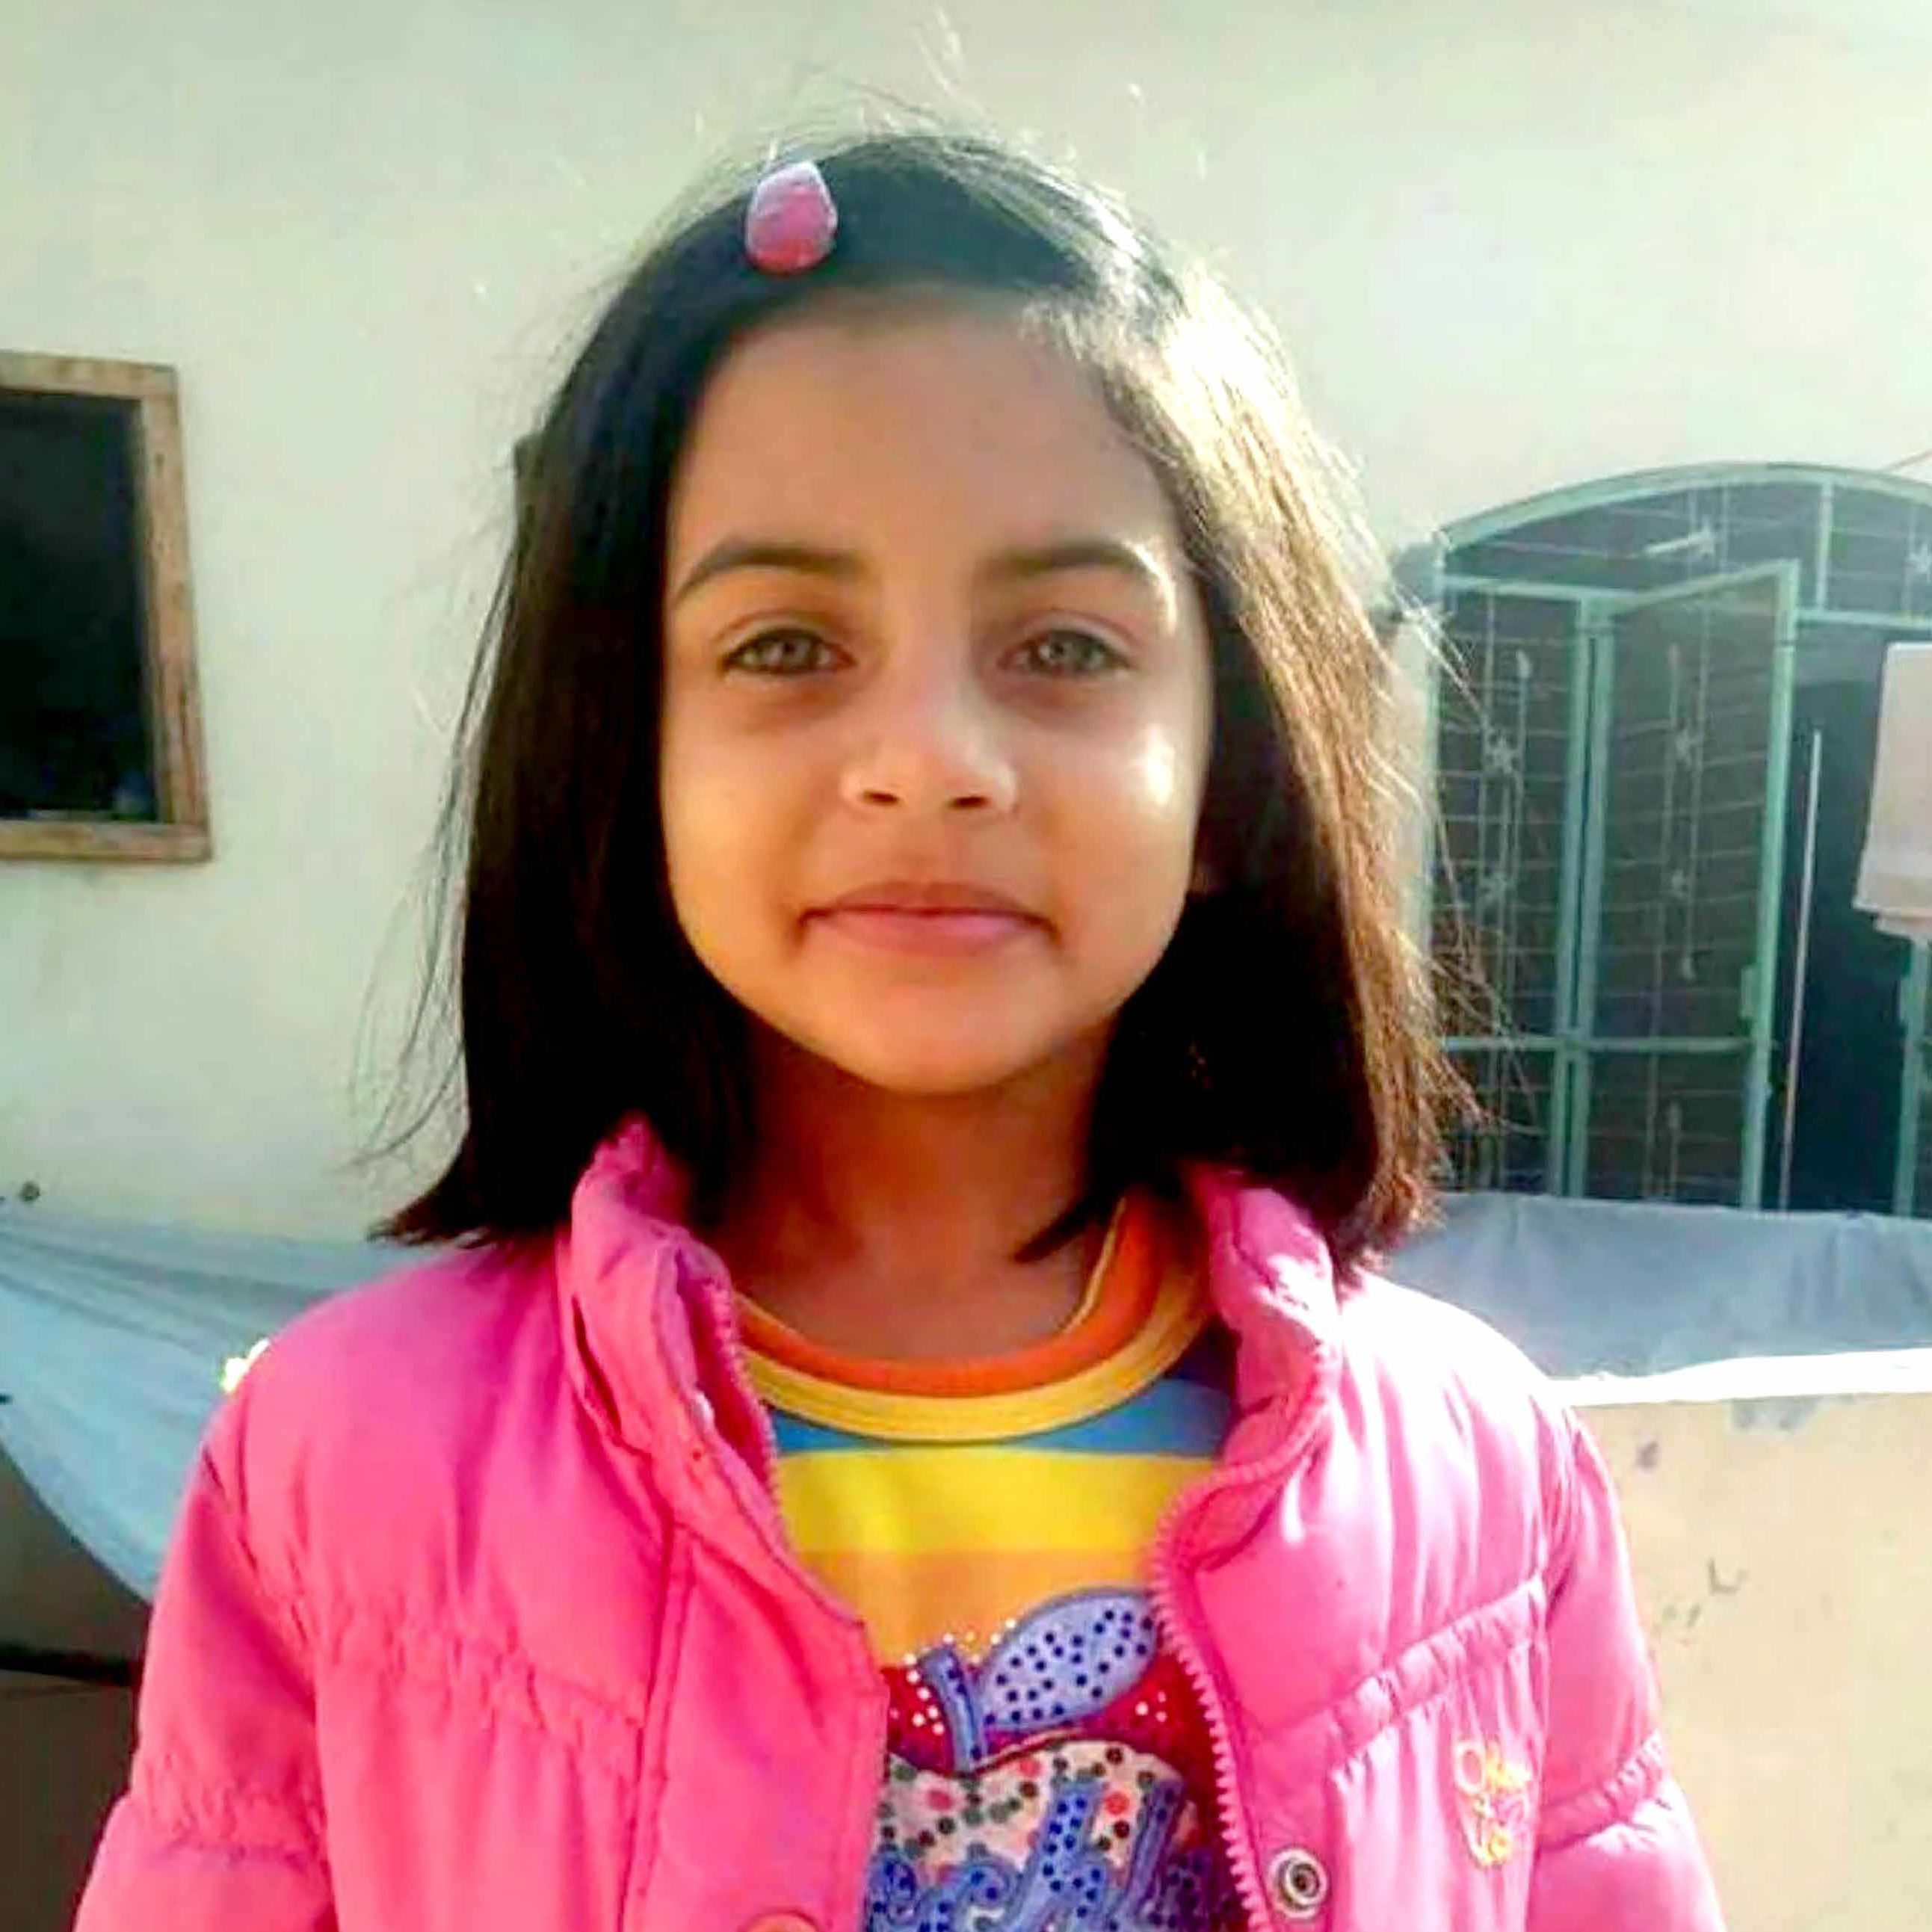 Rape Murder Sex Picture - Zainab: Protests over girl's rape, killing in Pakistan | CNN